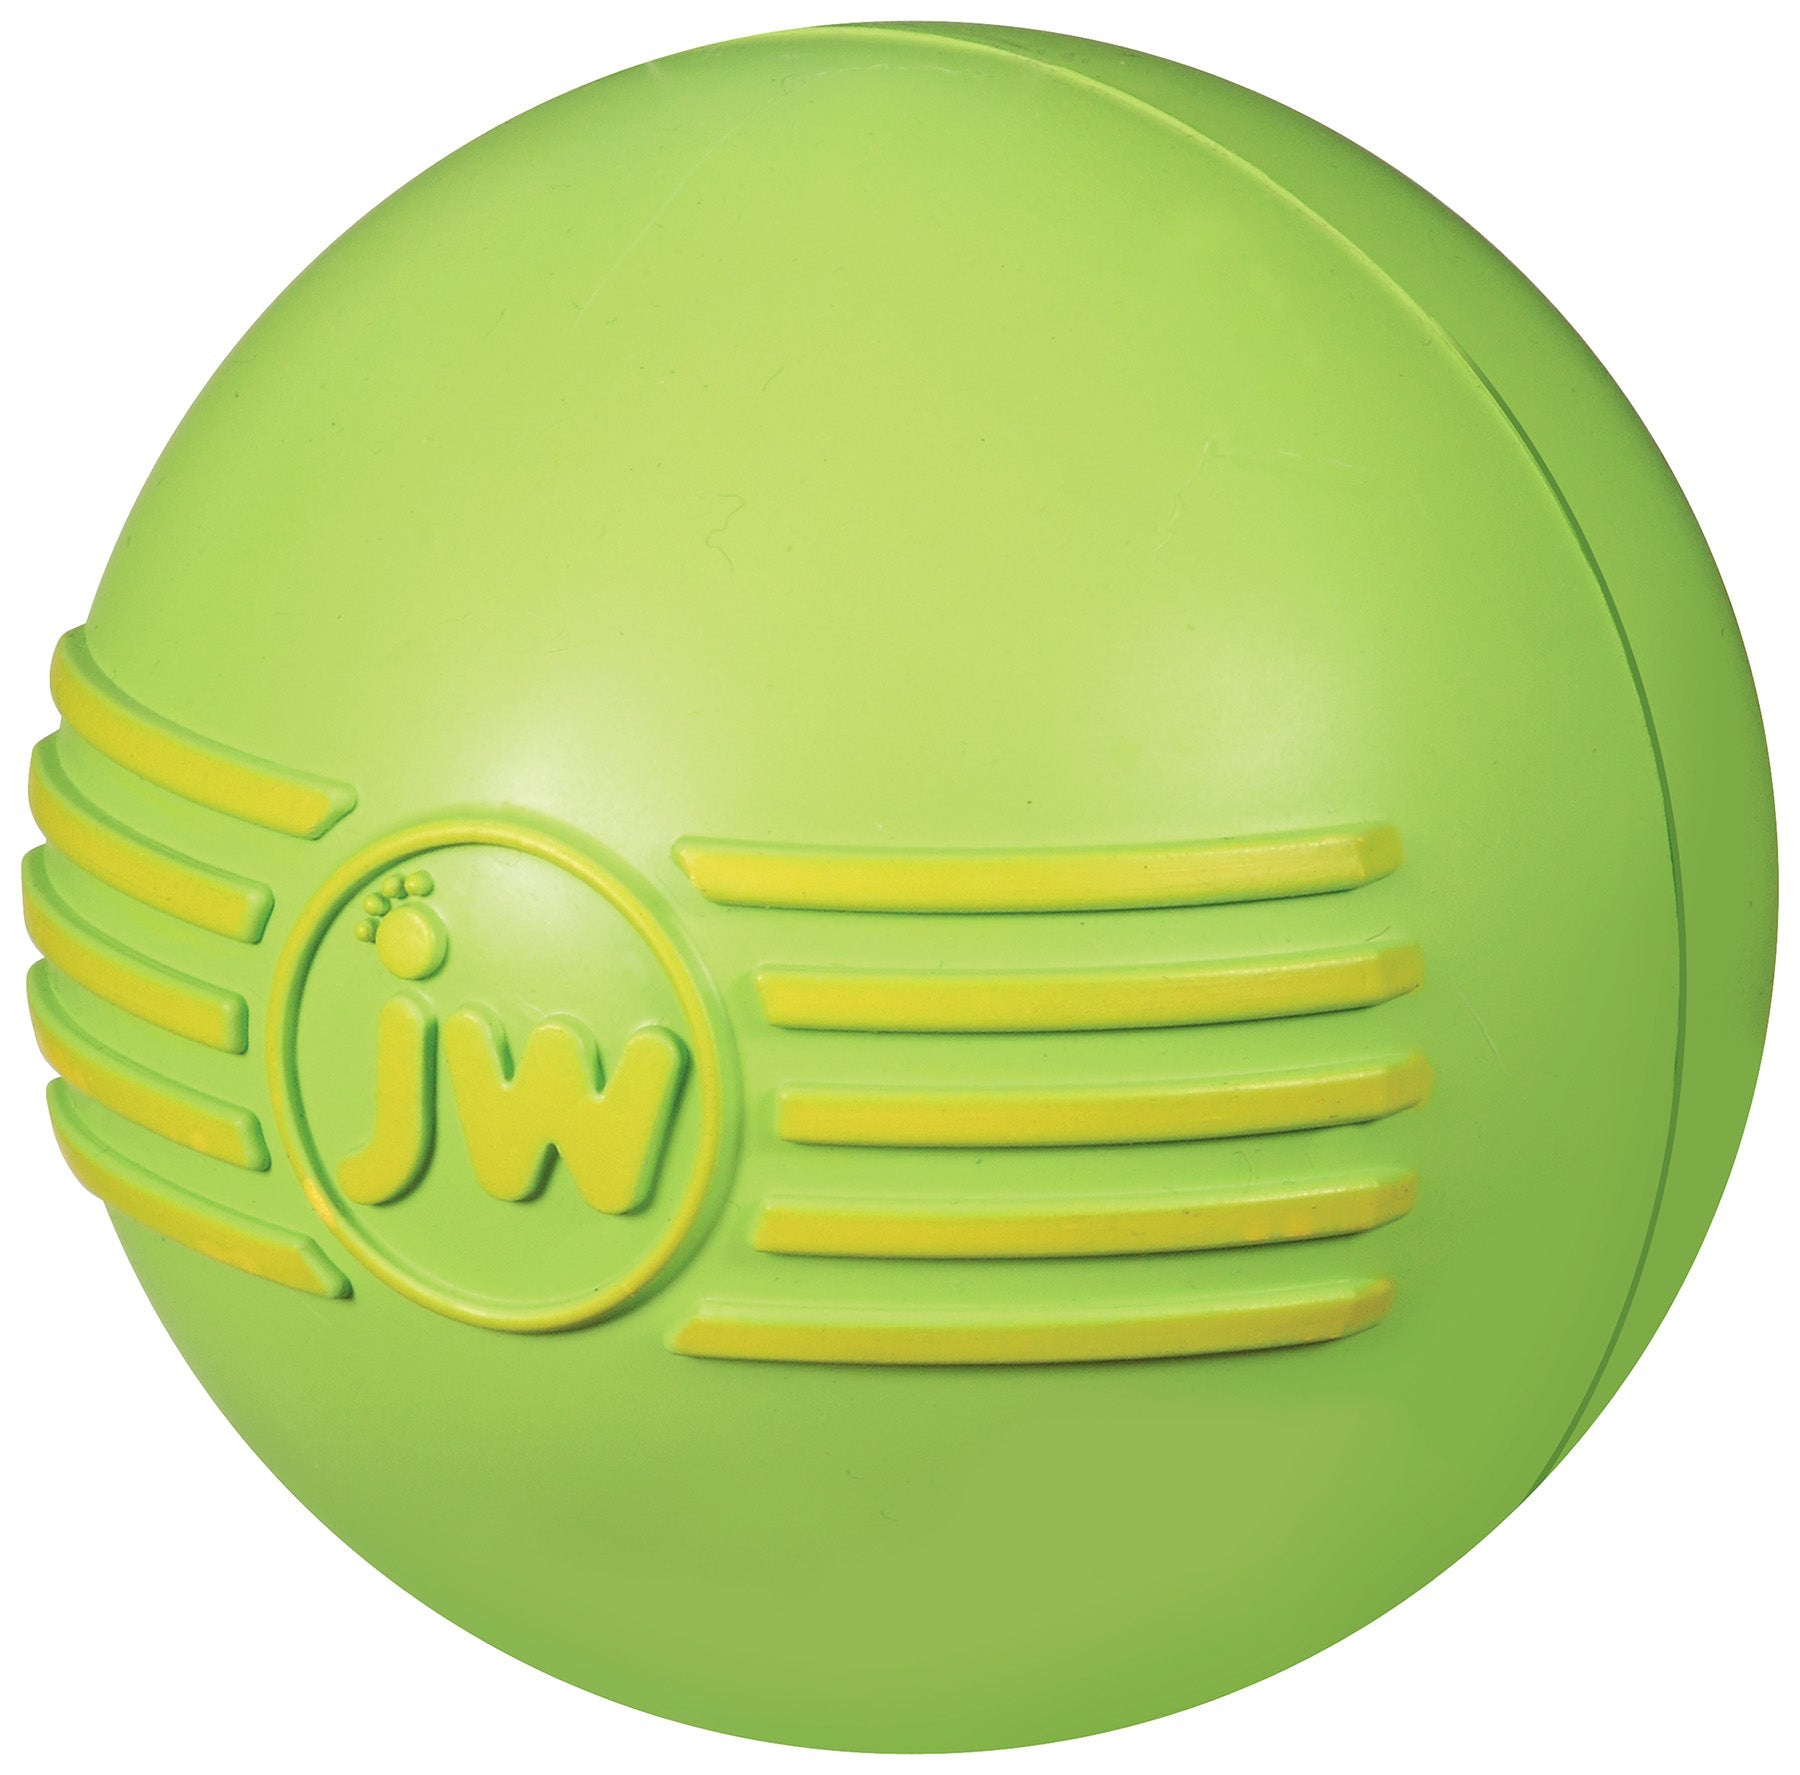 JW Isqueak Ball L 10 cm